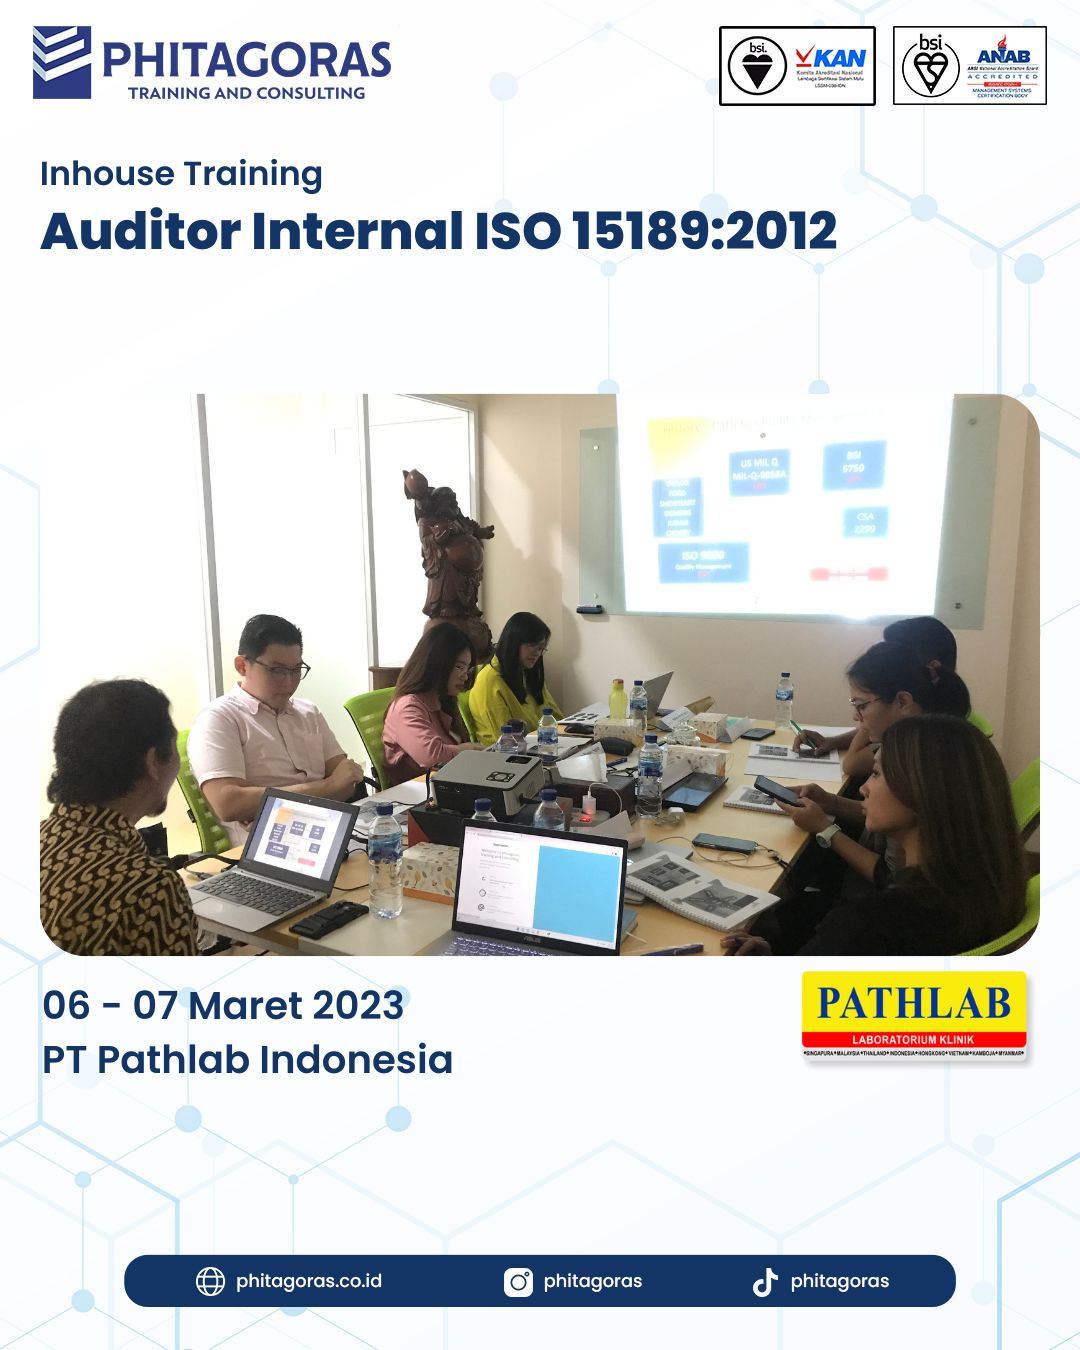 Inhouse Training Auditor Internal ISO 15189:2012 - PT Pathlab Indonesia